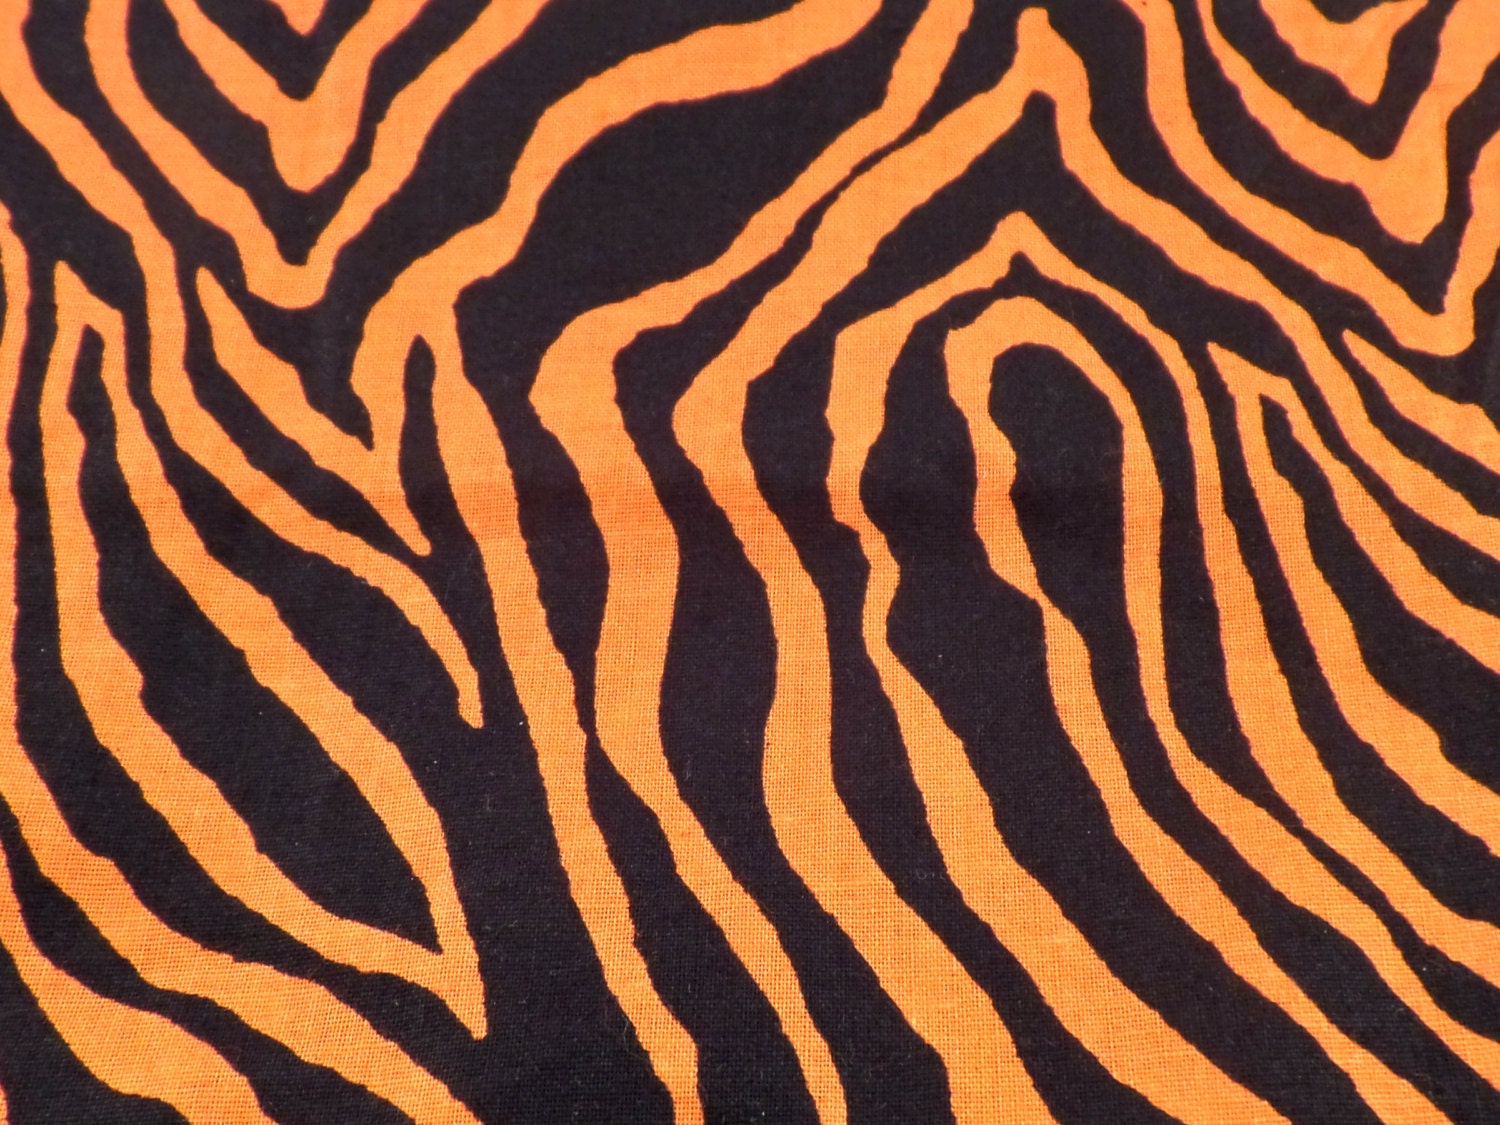 Spooky Zebra Striped Orange and Black Dog Collar by Maltipaws